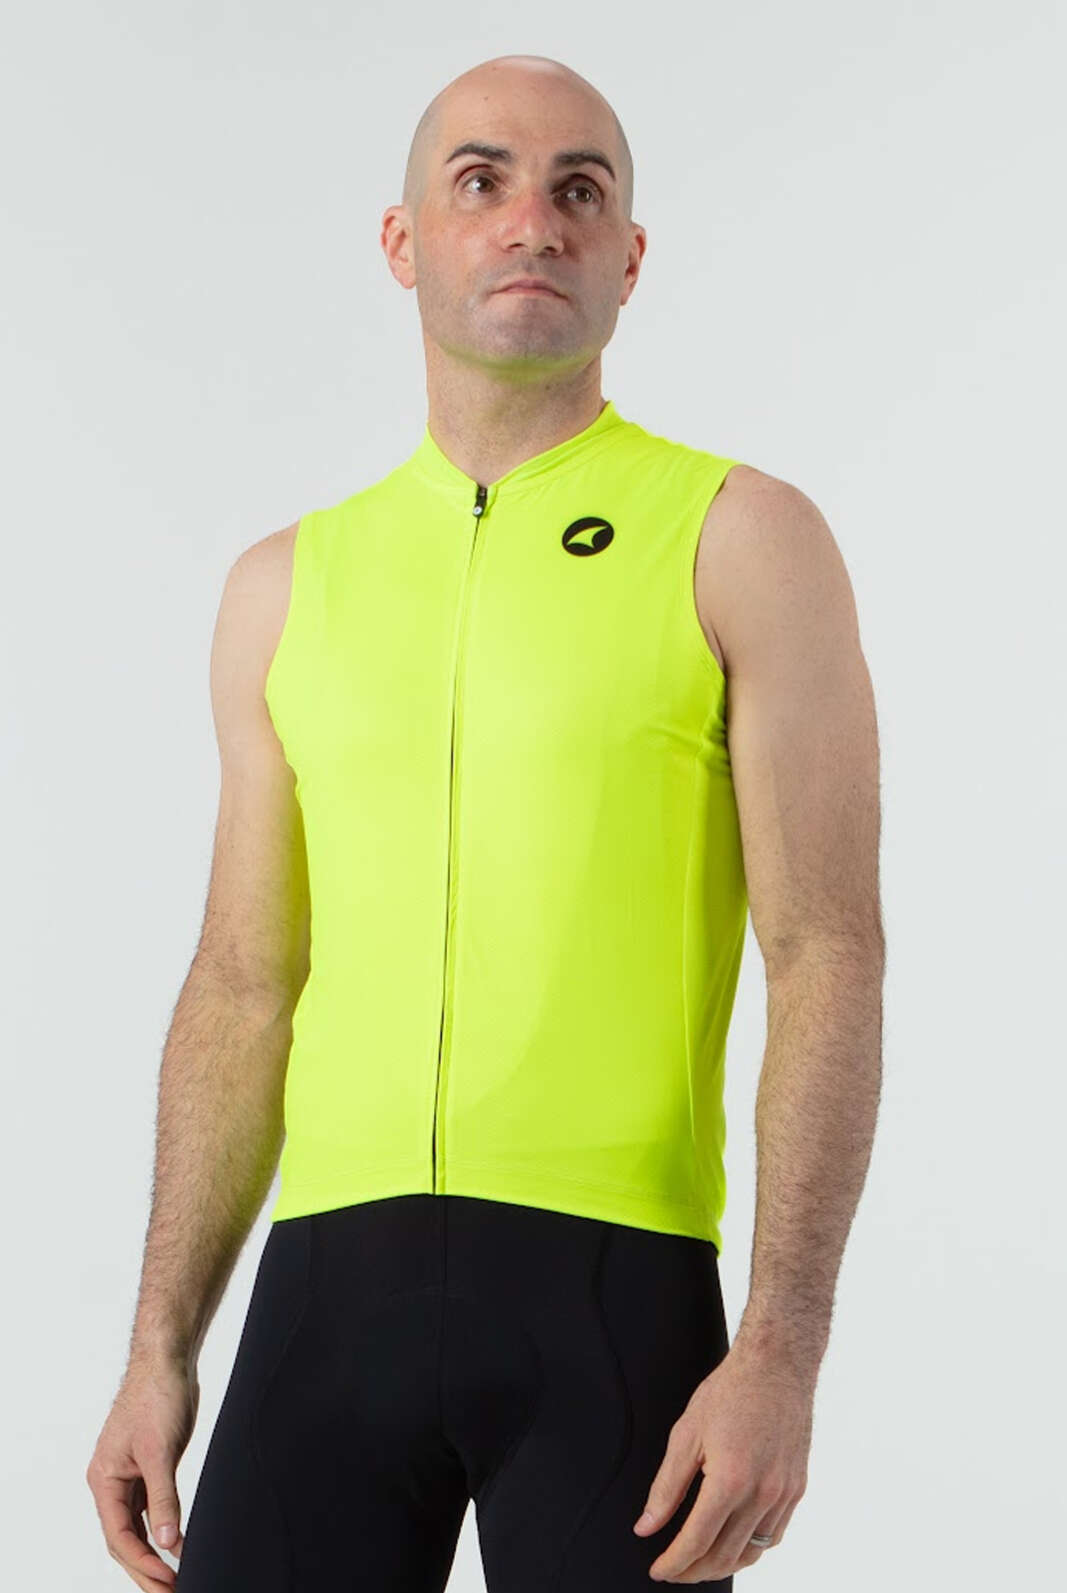 Men's High-Viz Yellow Sleeveless Cycling Jersey - Front View